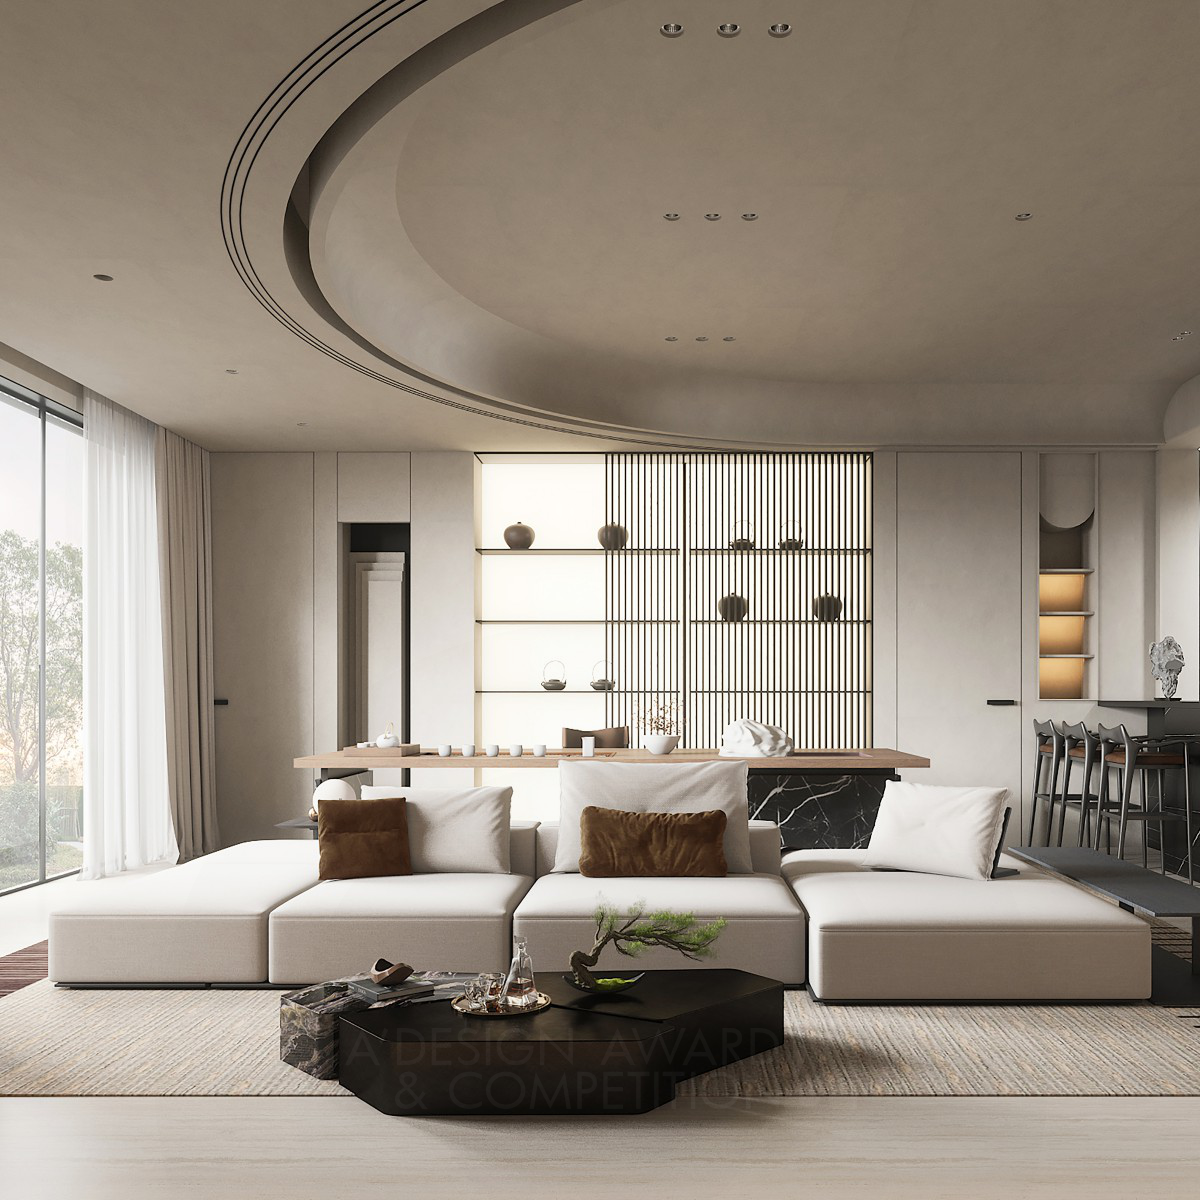 Shenzhen Plus Architectural Design Co., Ltd Villa